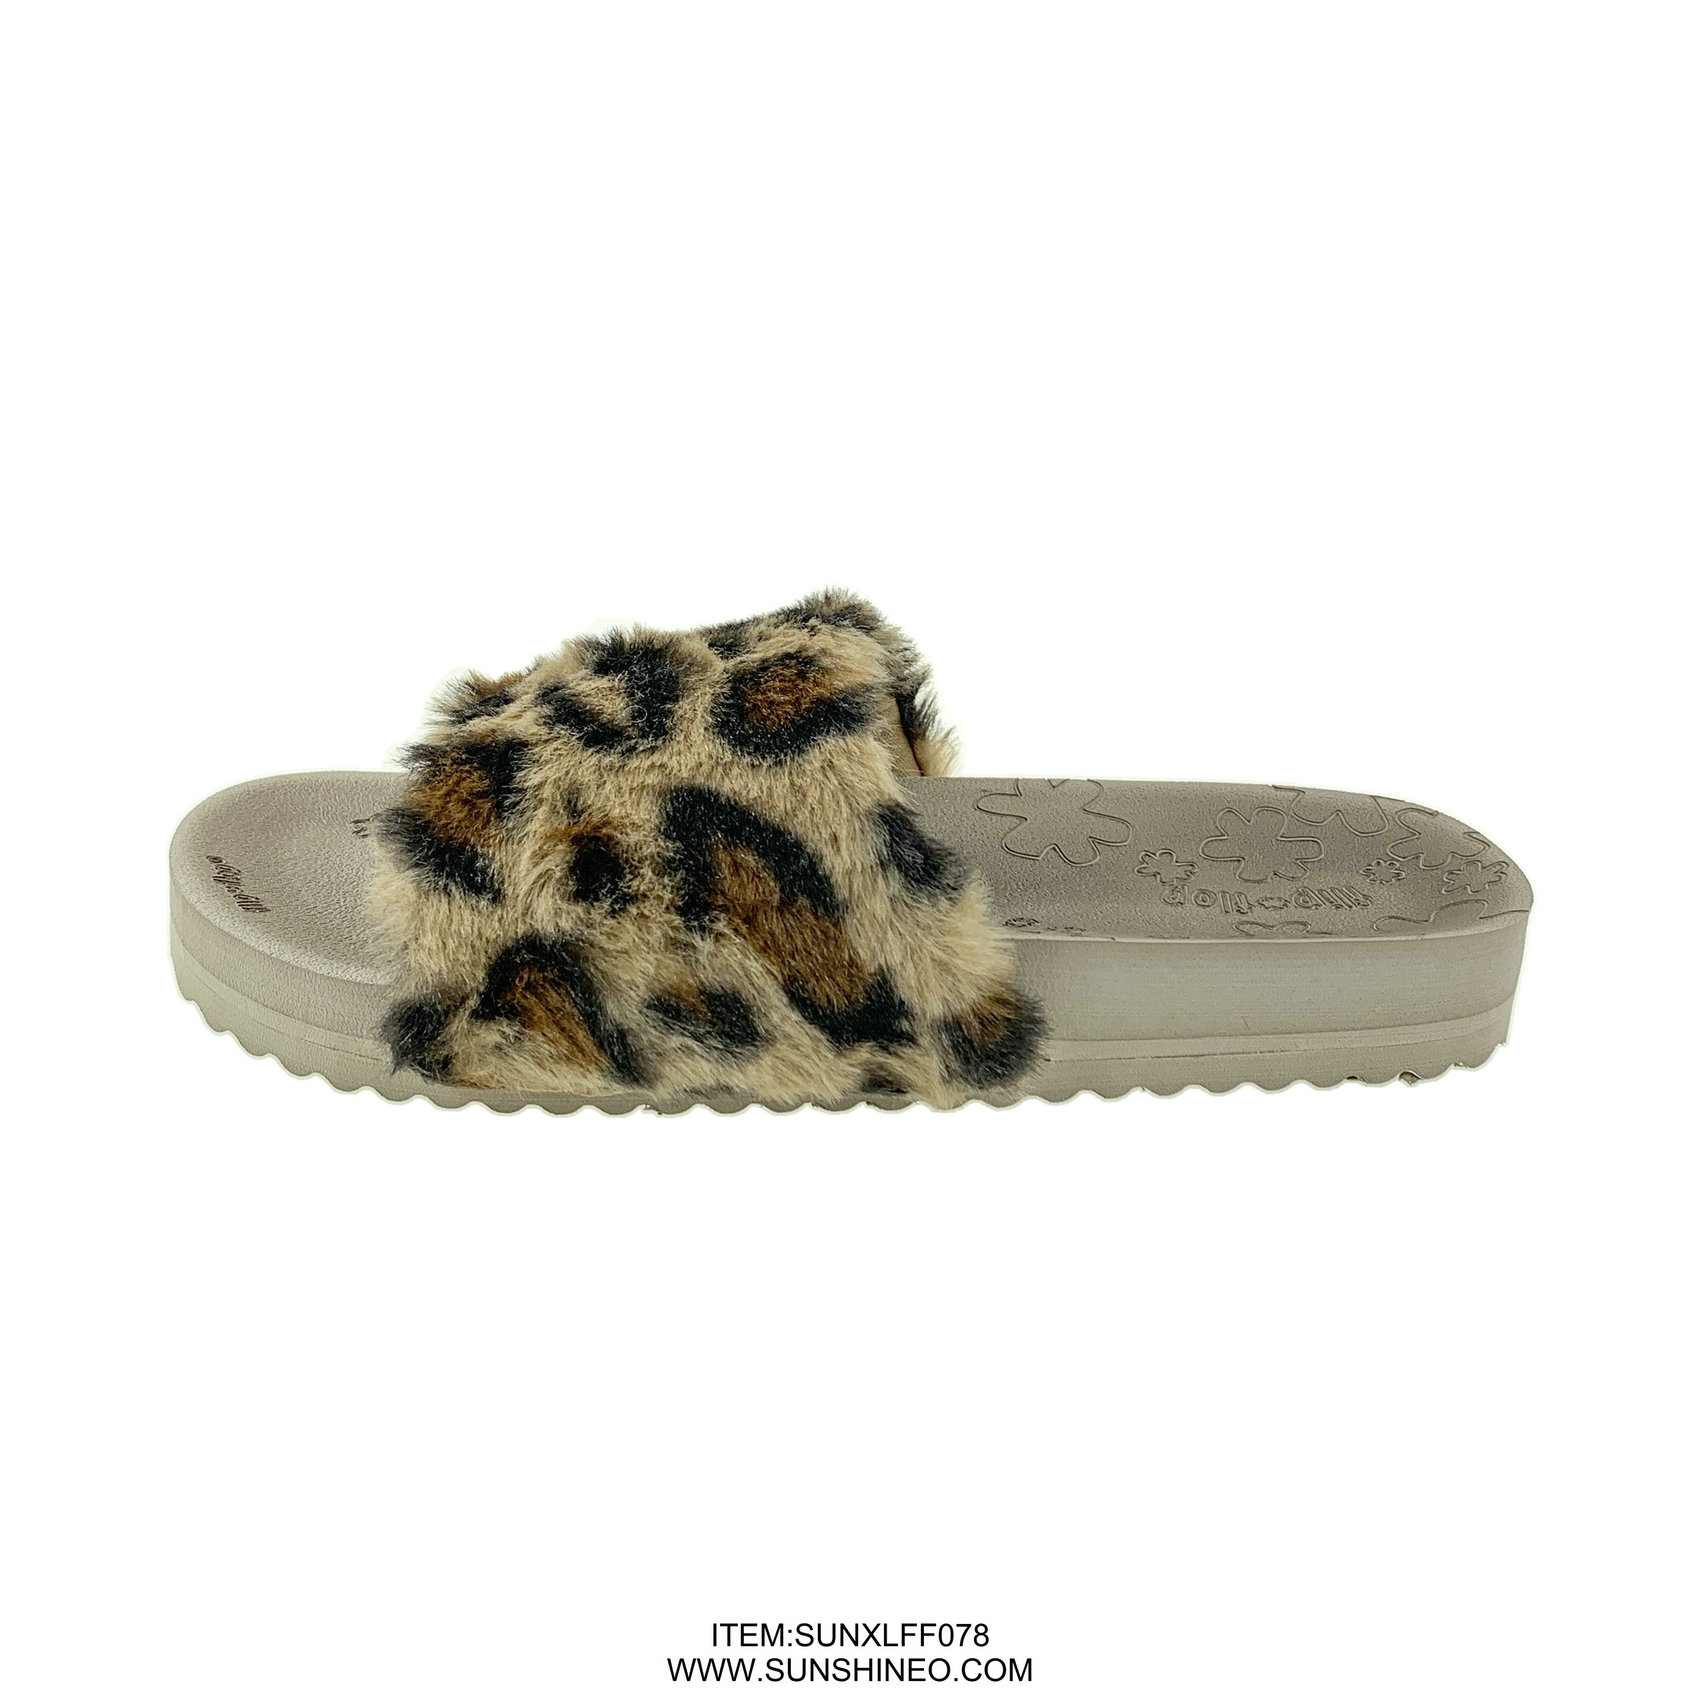 SUNXLFF078 fur flip flop sandals winter slippers